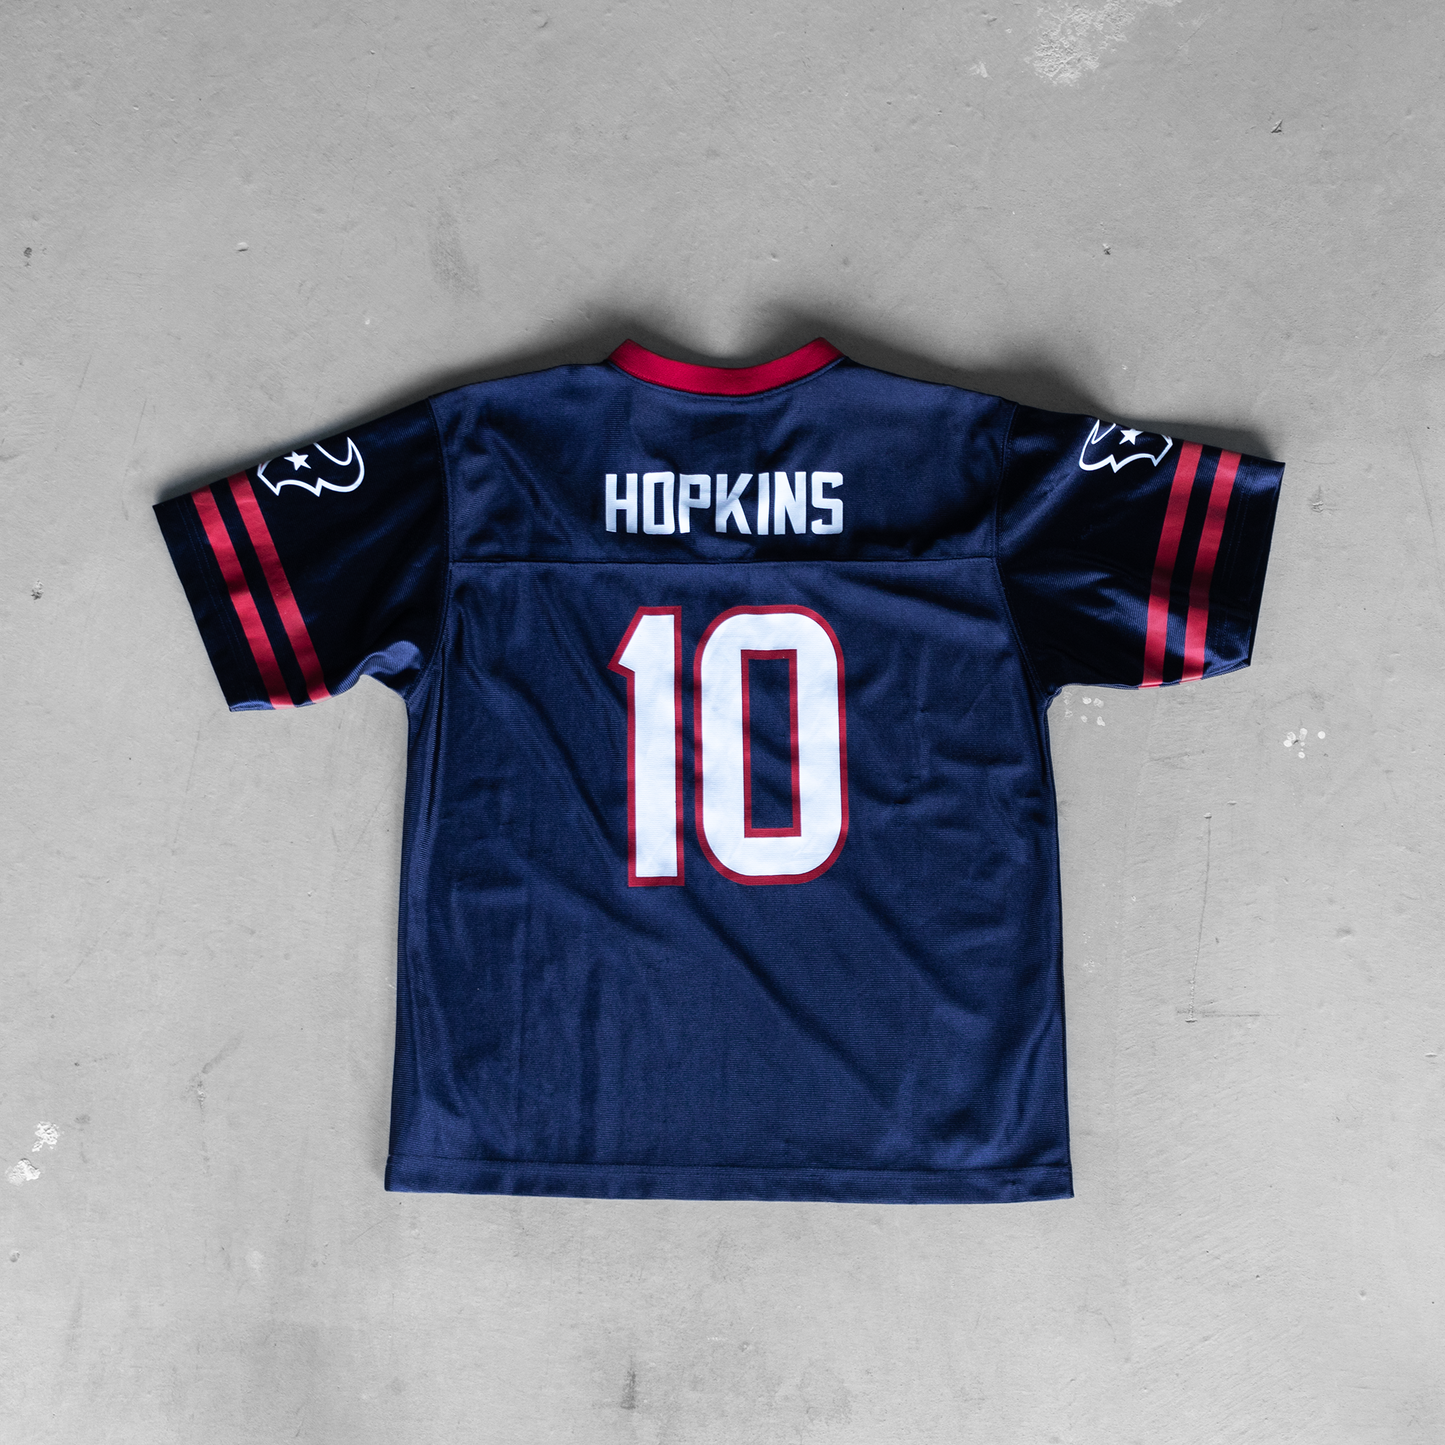 NFL Houston Texans Deandre Hopkins #10 Youth Football Jersey (L)